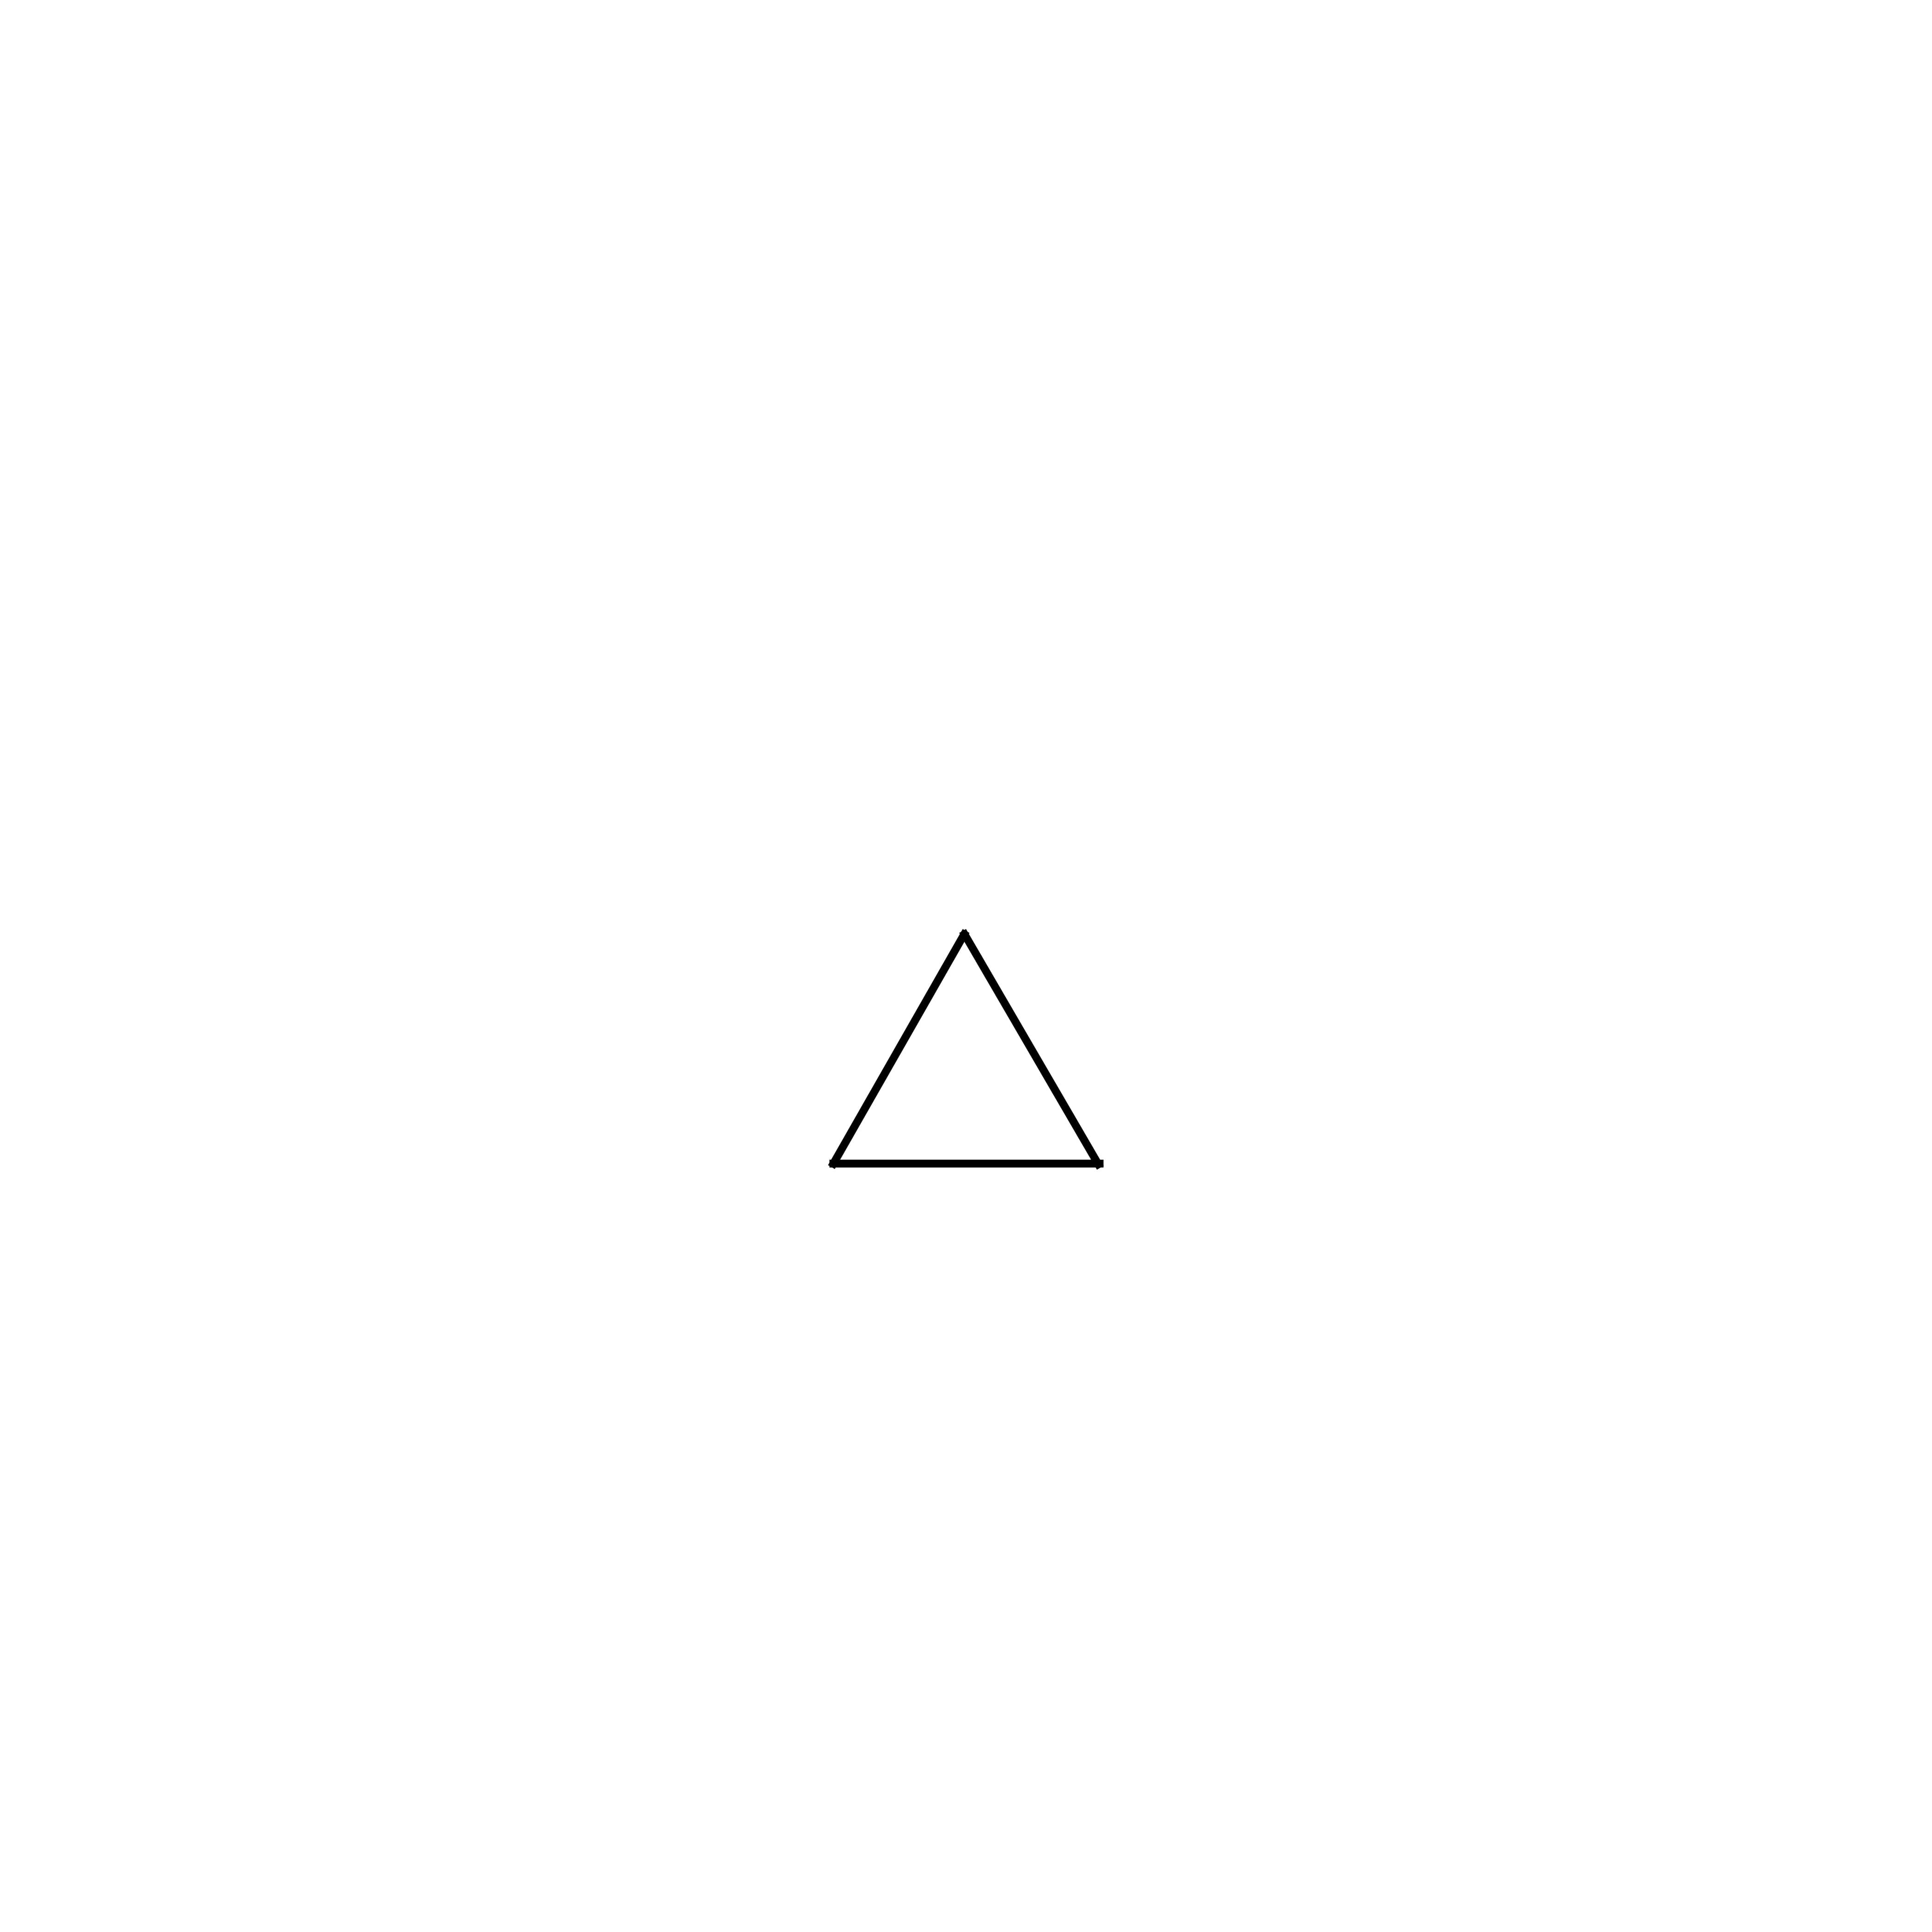 draw optical illusion 3d triangle